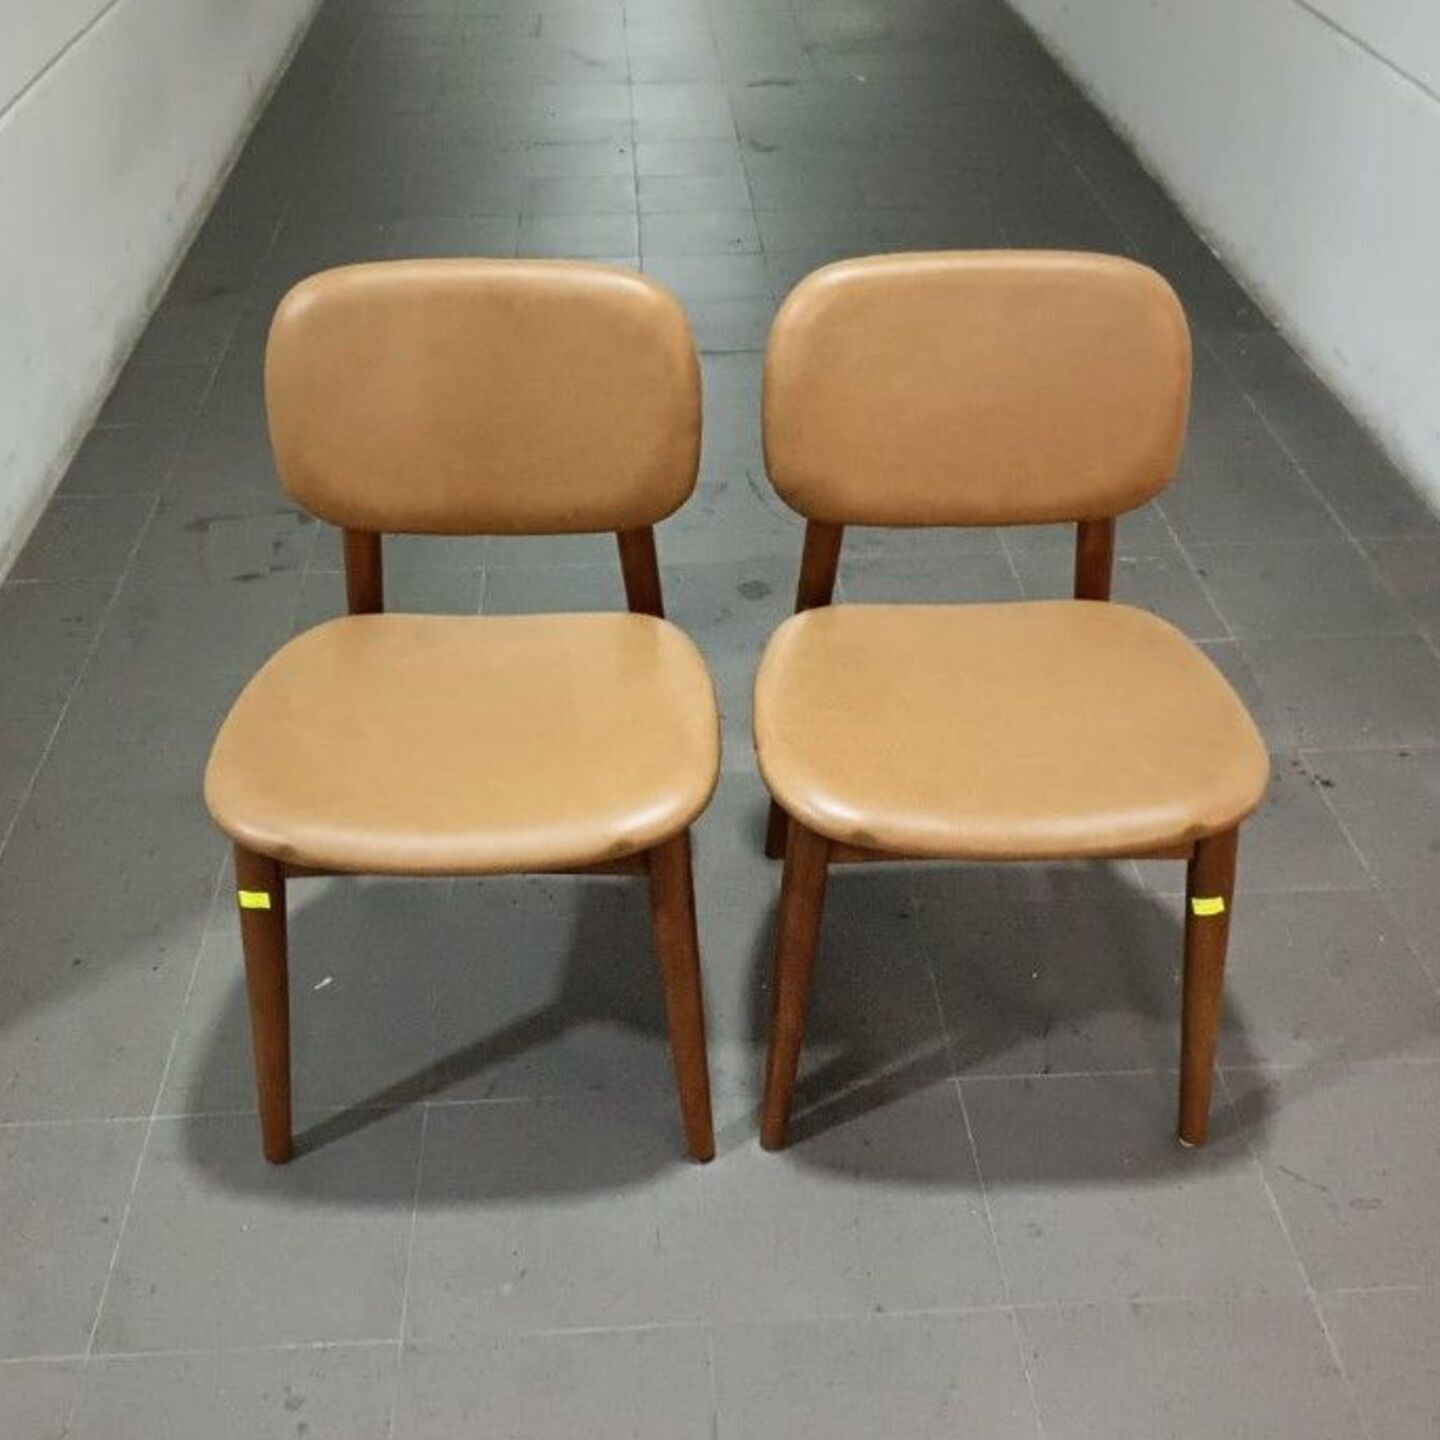 CHUNGHA Top Grain Leather Dining Chairs Walnut - set of 2